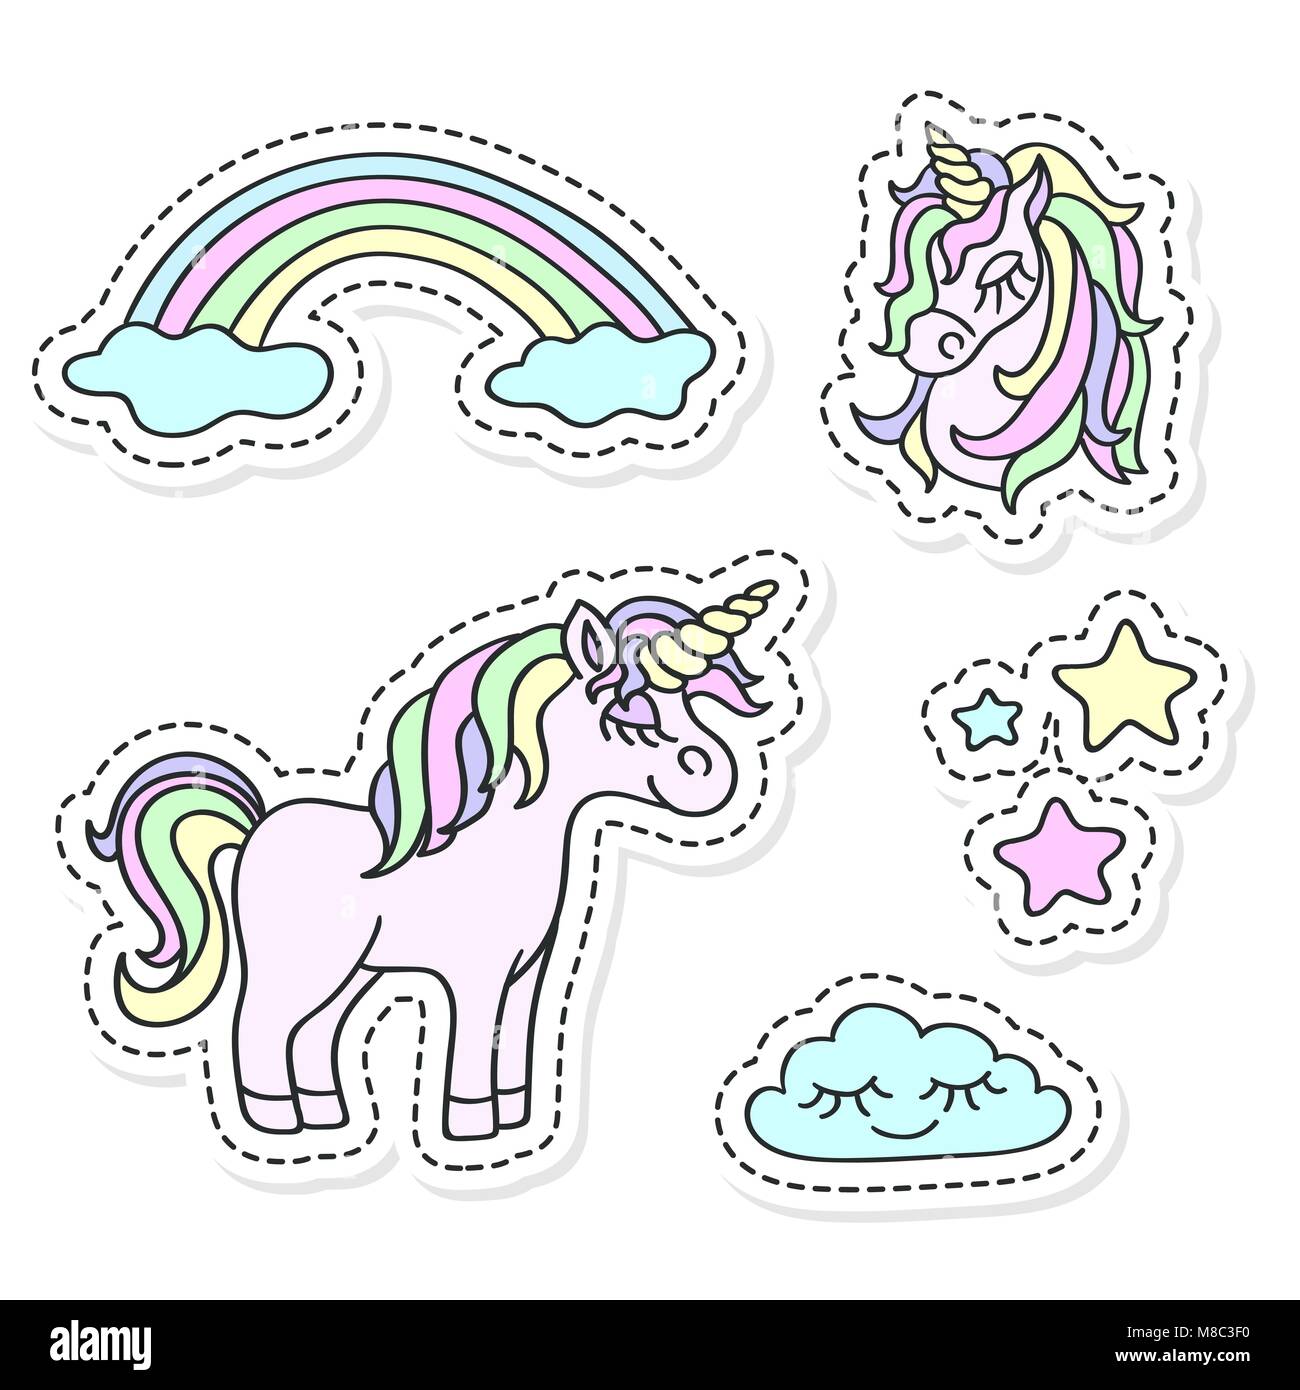 Unicorn With Rainbow Clouds Stars Stock Photos And Unicorn With Rainbow